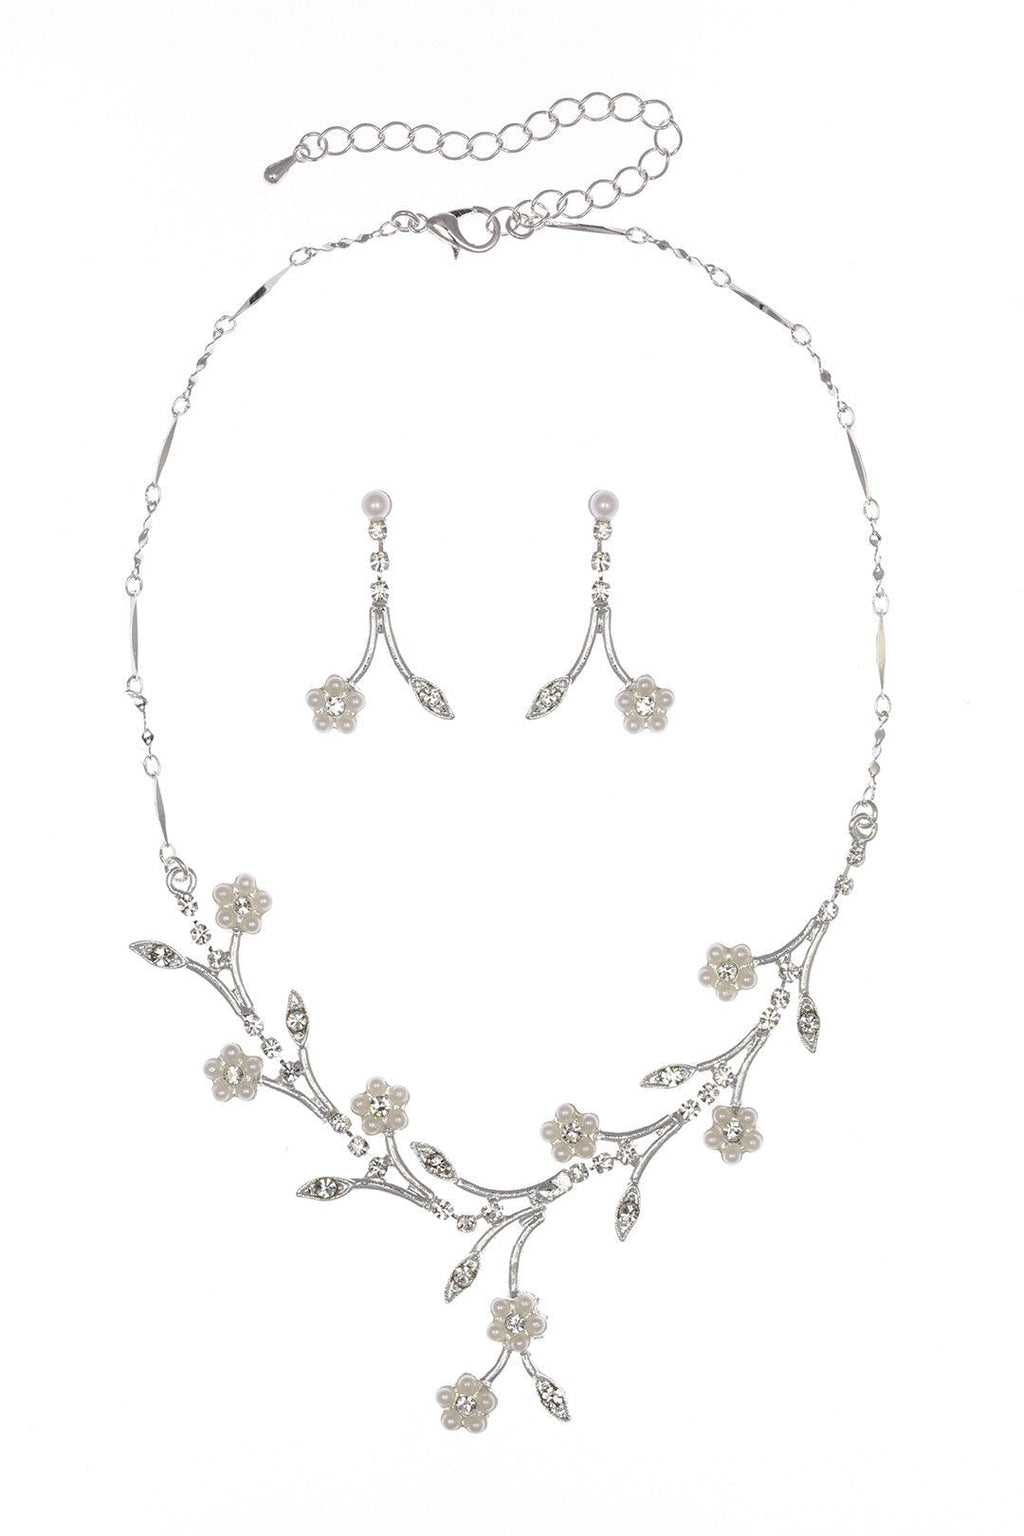 [Australia] - Crystal Flower Leaf Bridal Wedding Necklace Earrings Set - Silver Plated Faux Pearls N143 